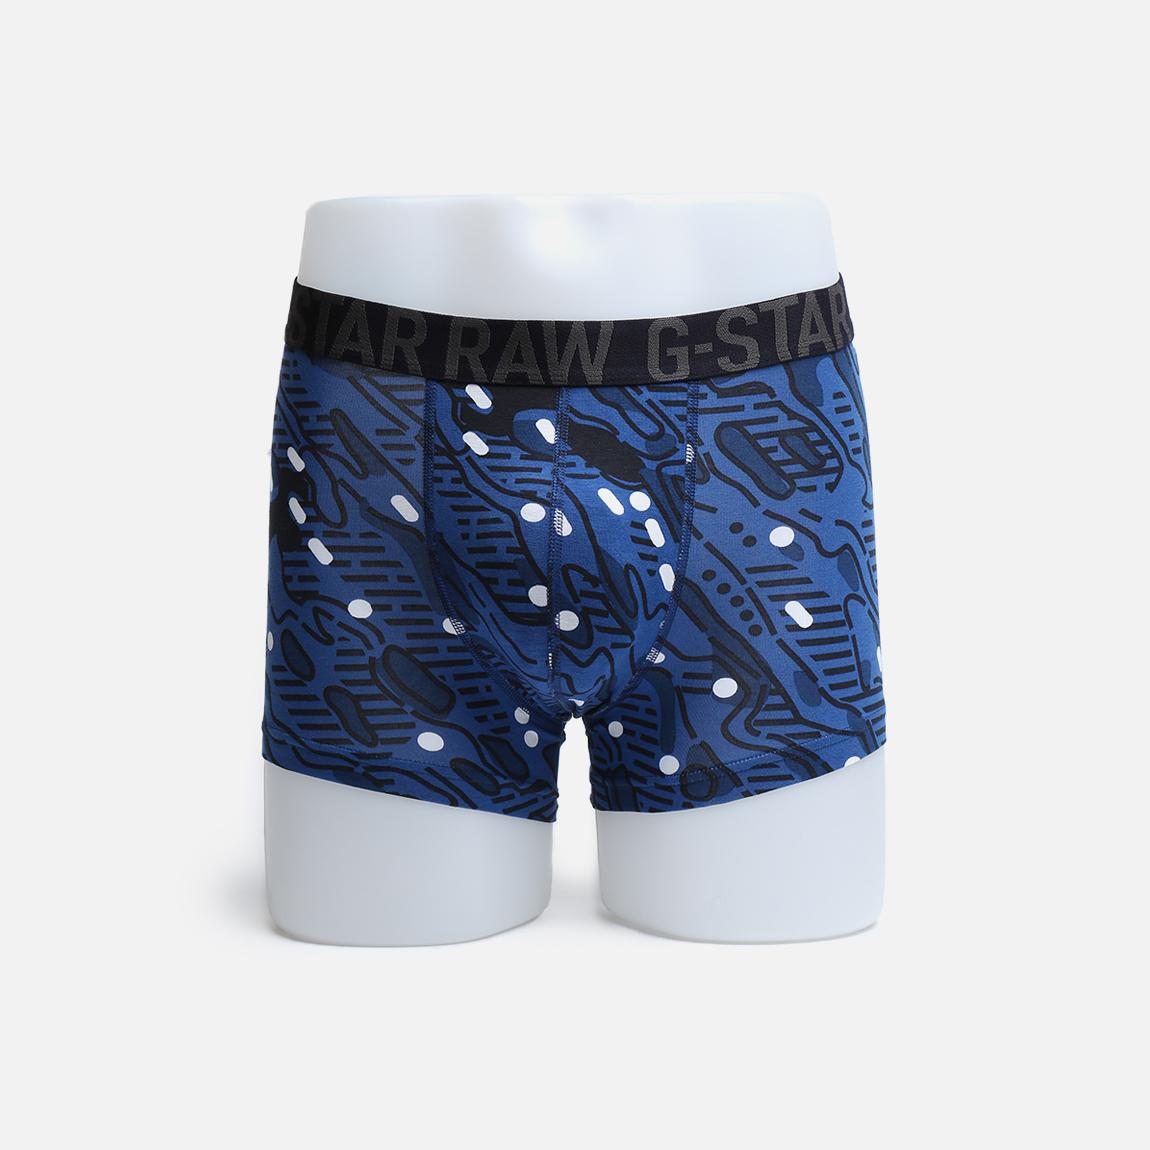 Dalmar Sport Trunk - True Blue G-Star RAW Underwear | Superbalist.com